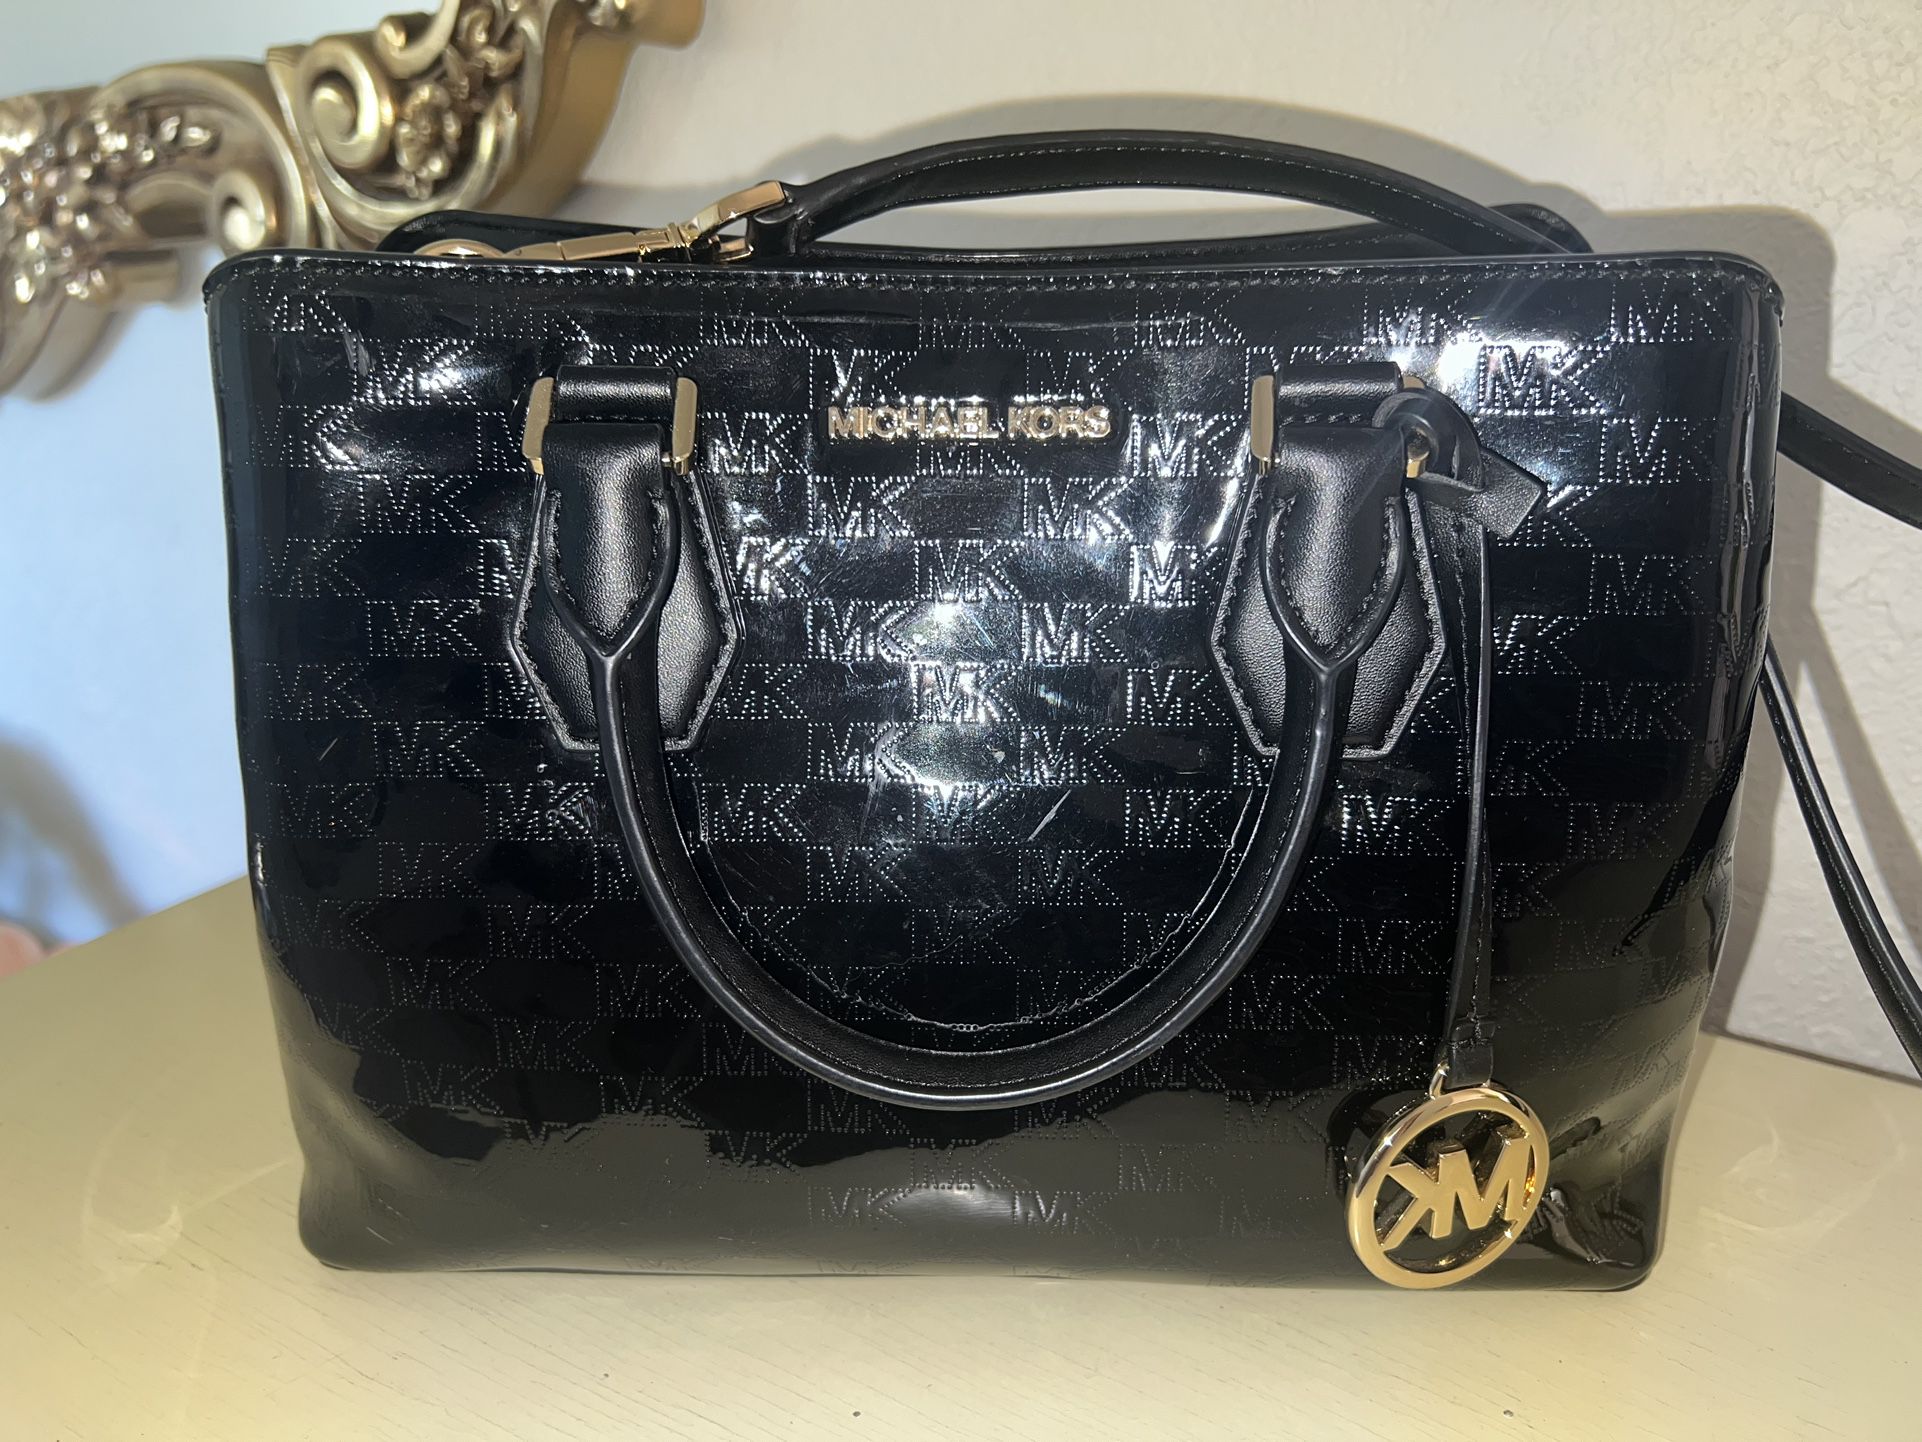 MK purse $95